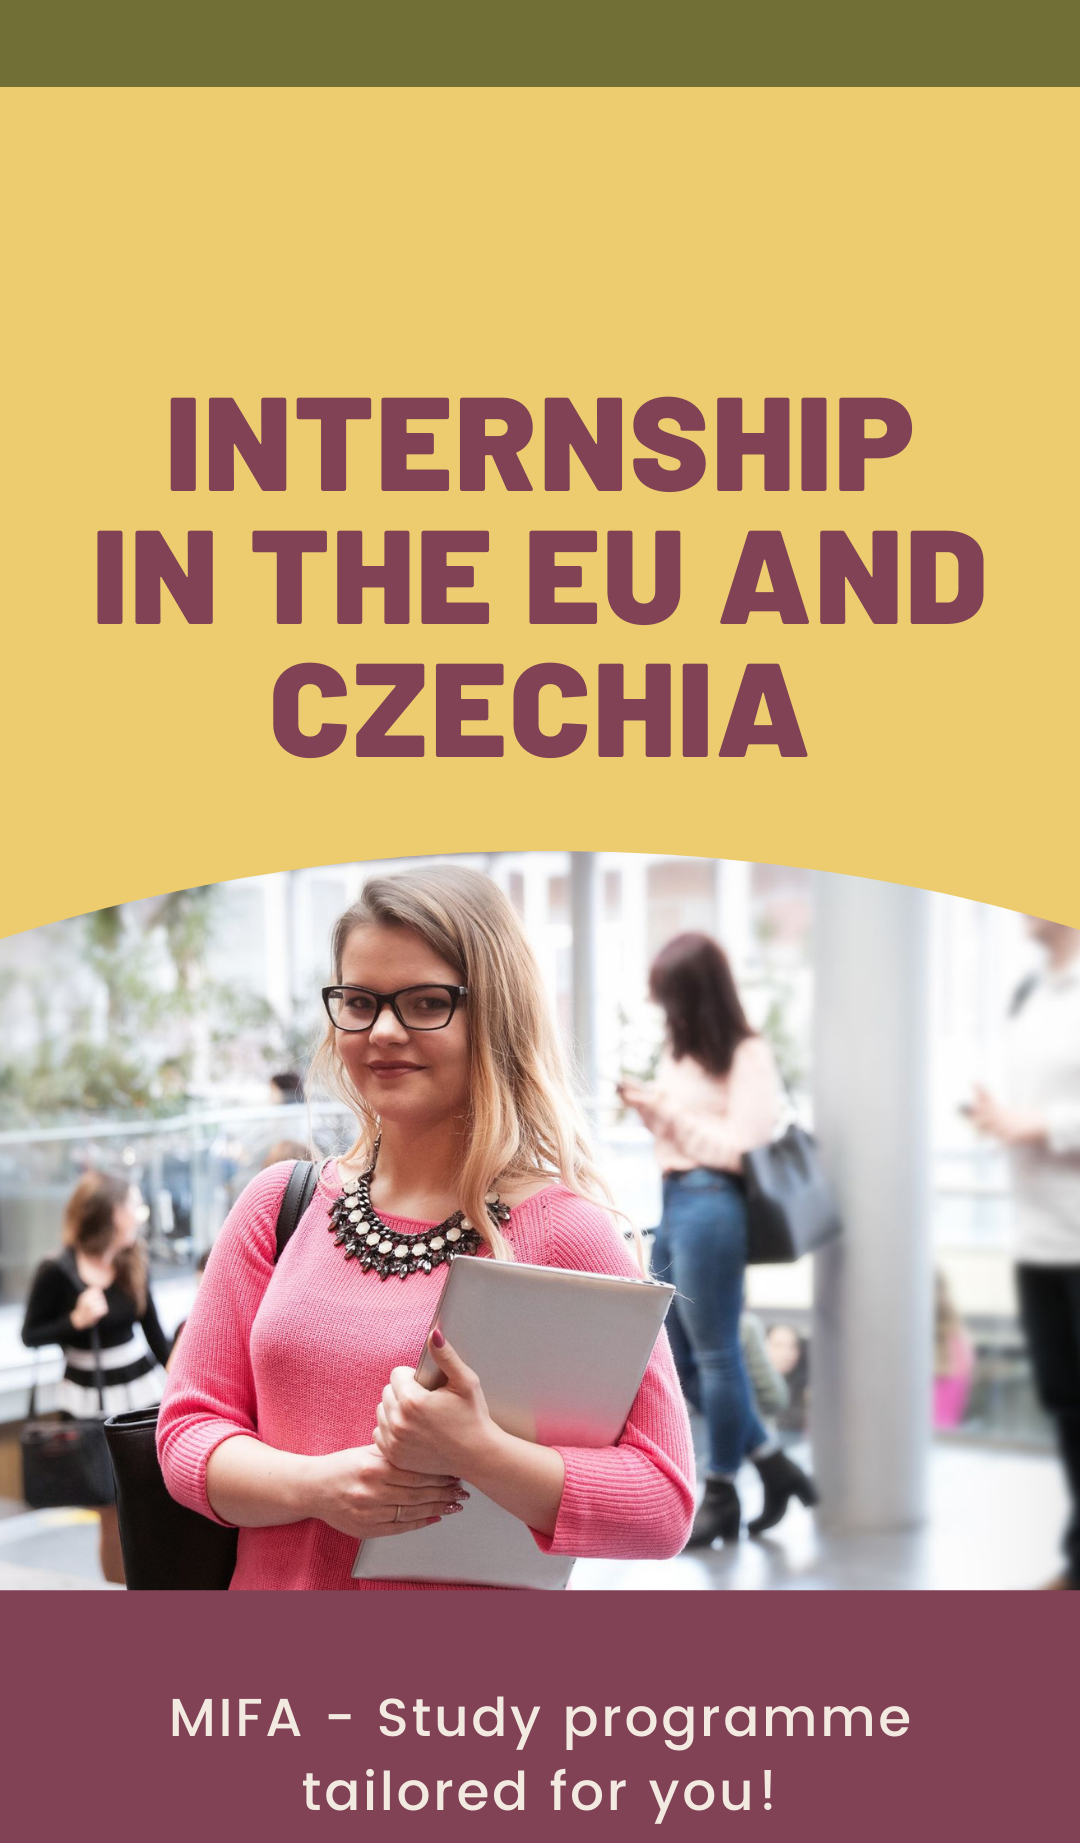 Hot News – Internship in Czechia for MIFA students!